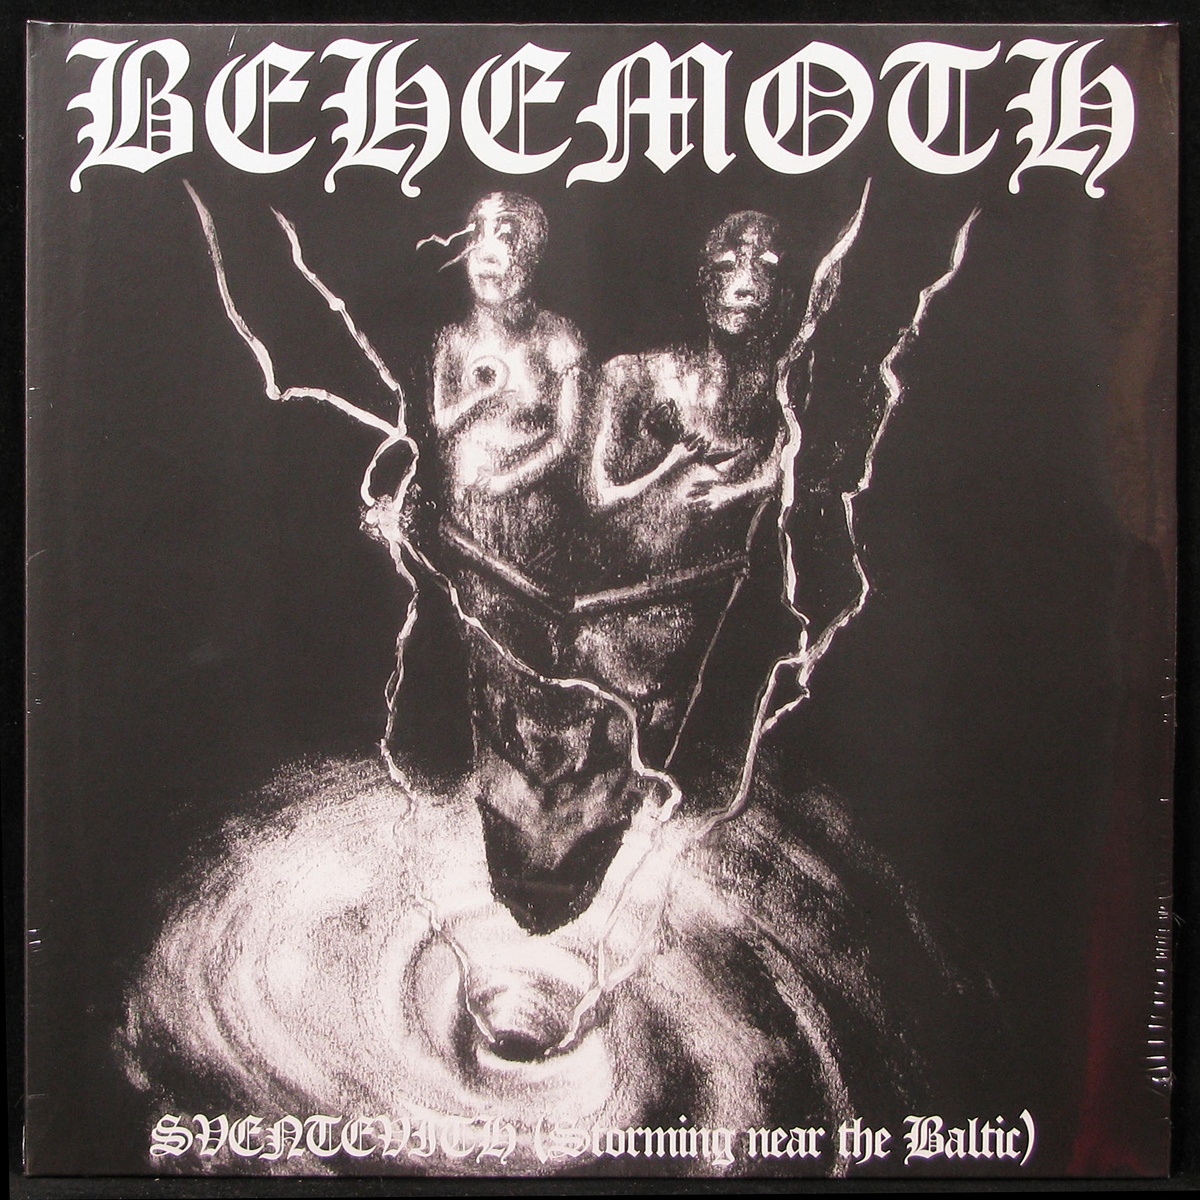 LP Behemoth — Sventevith (Storming Near The Baltic) фото